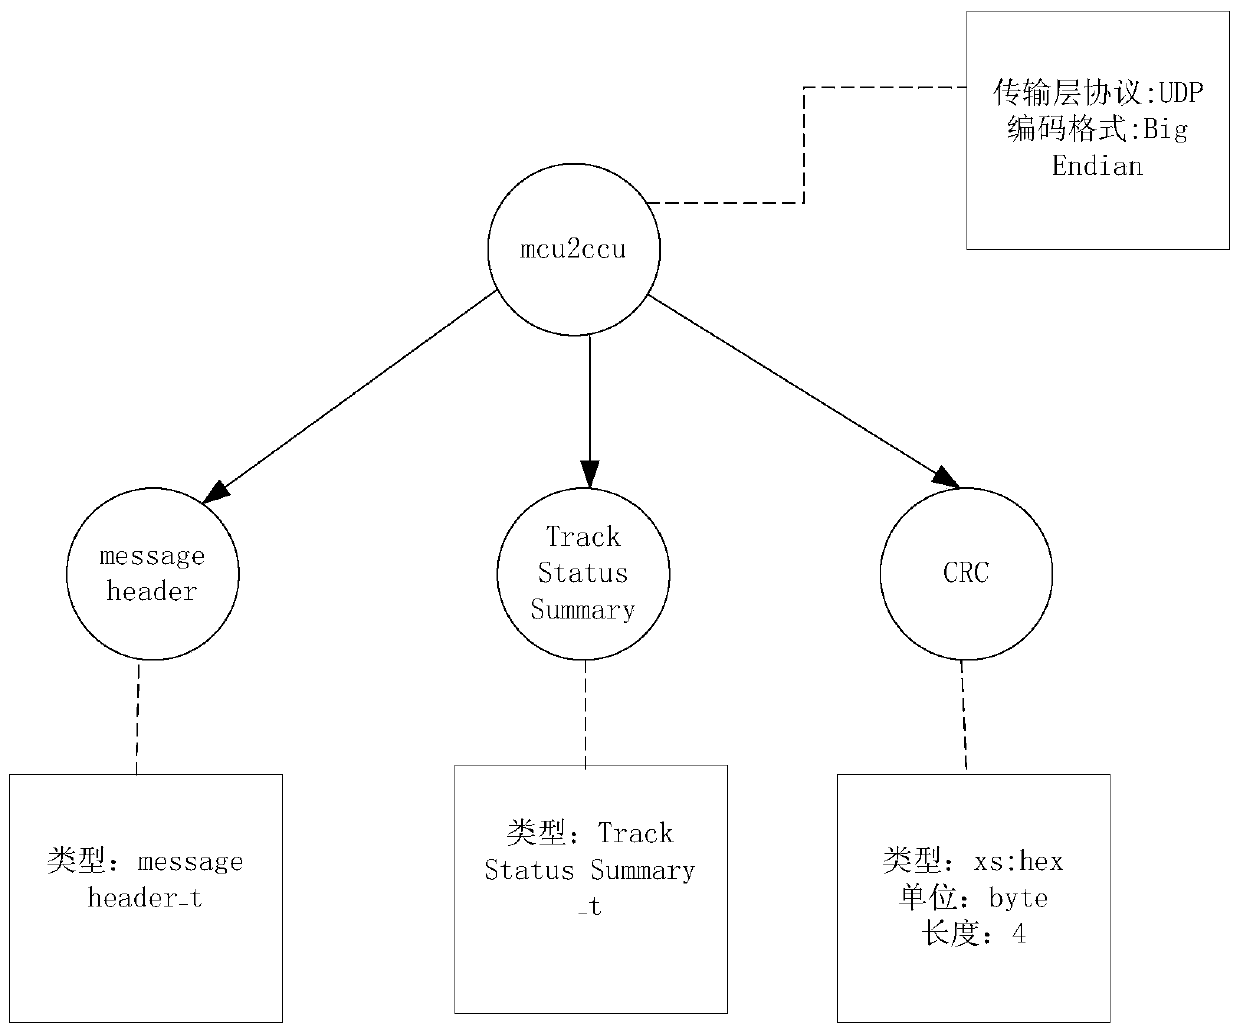 XML-based protocol analysis method for Wireshark